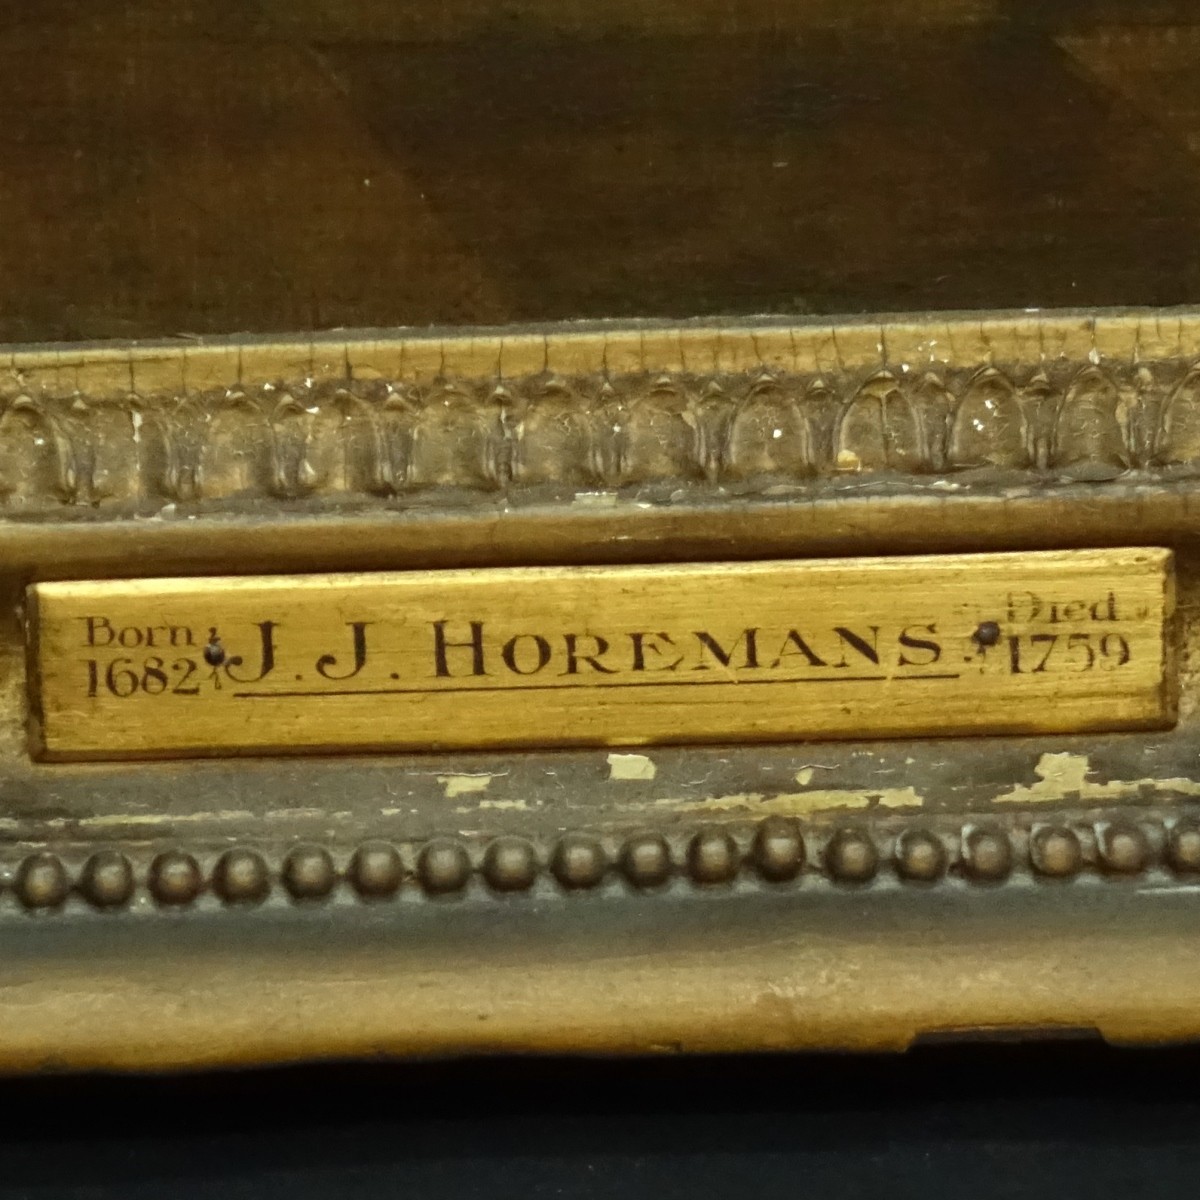 Jan Josef Horemans, Flemish (1682 - 1759)